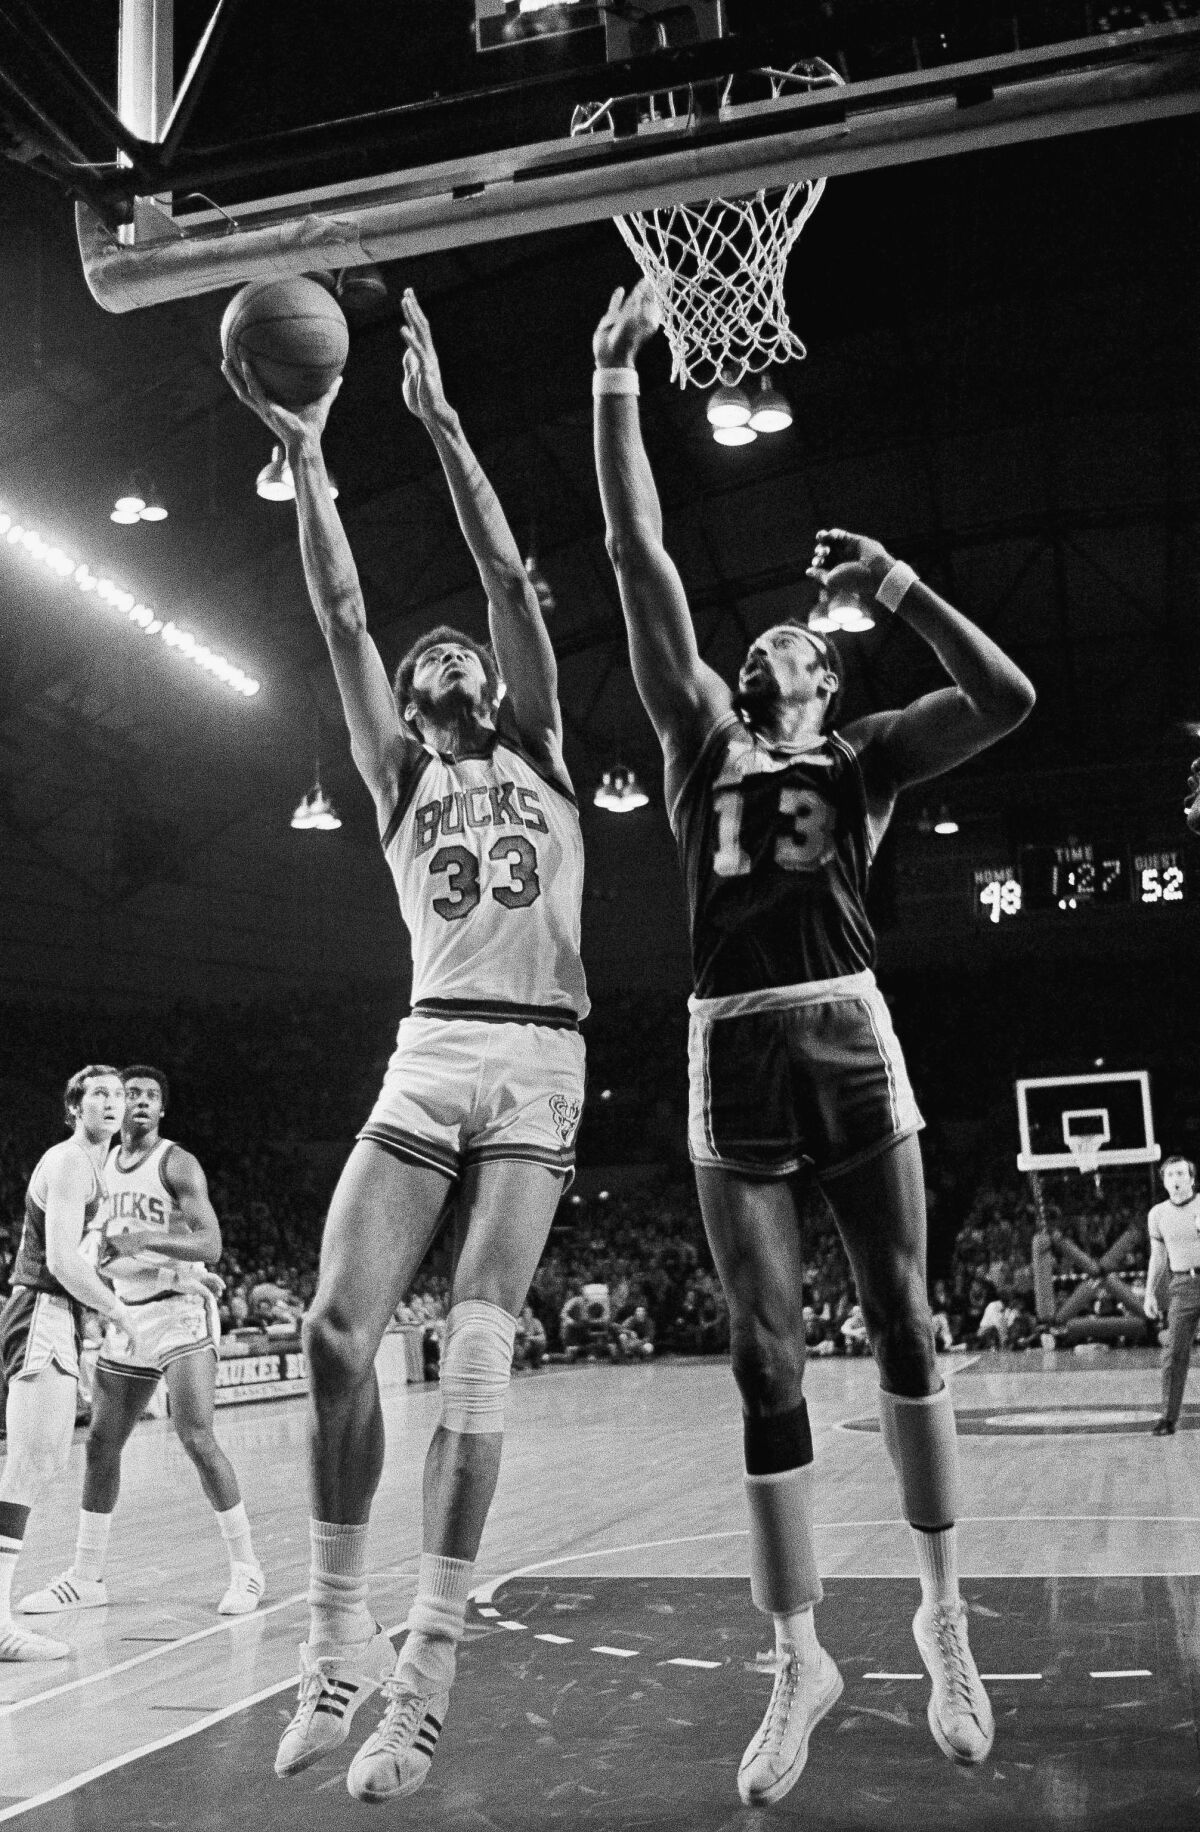 Wilt Chamberlain de los Lakers (bloquea el tiro de Kareem Abdul-Jabbar de los Milwaukee Bucks).